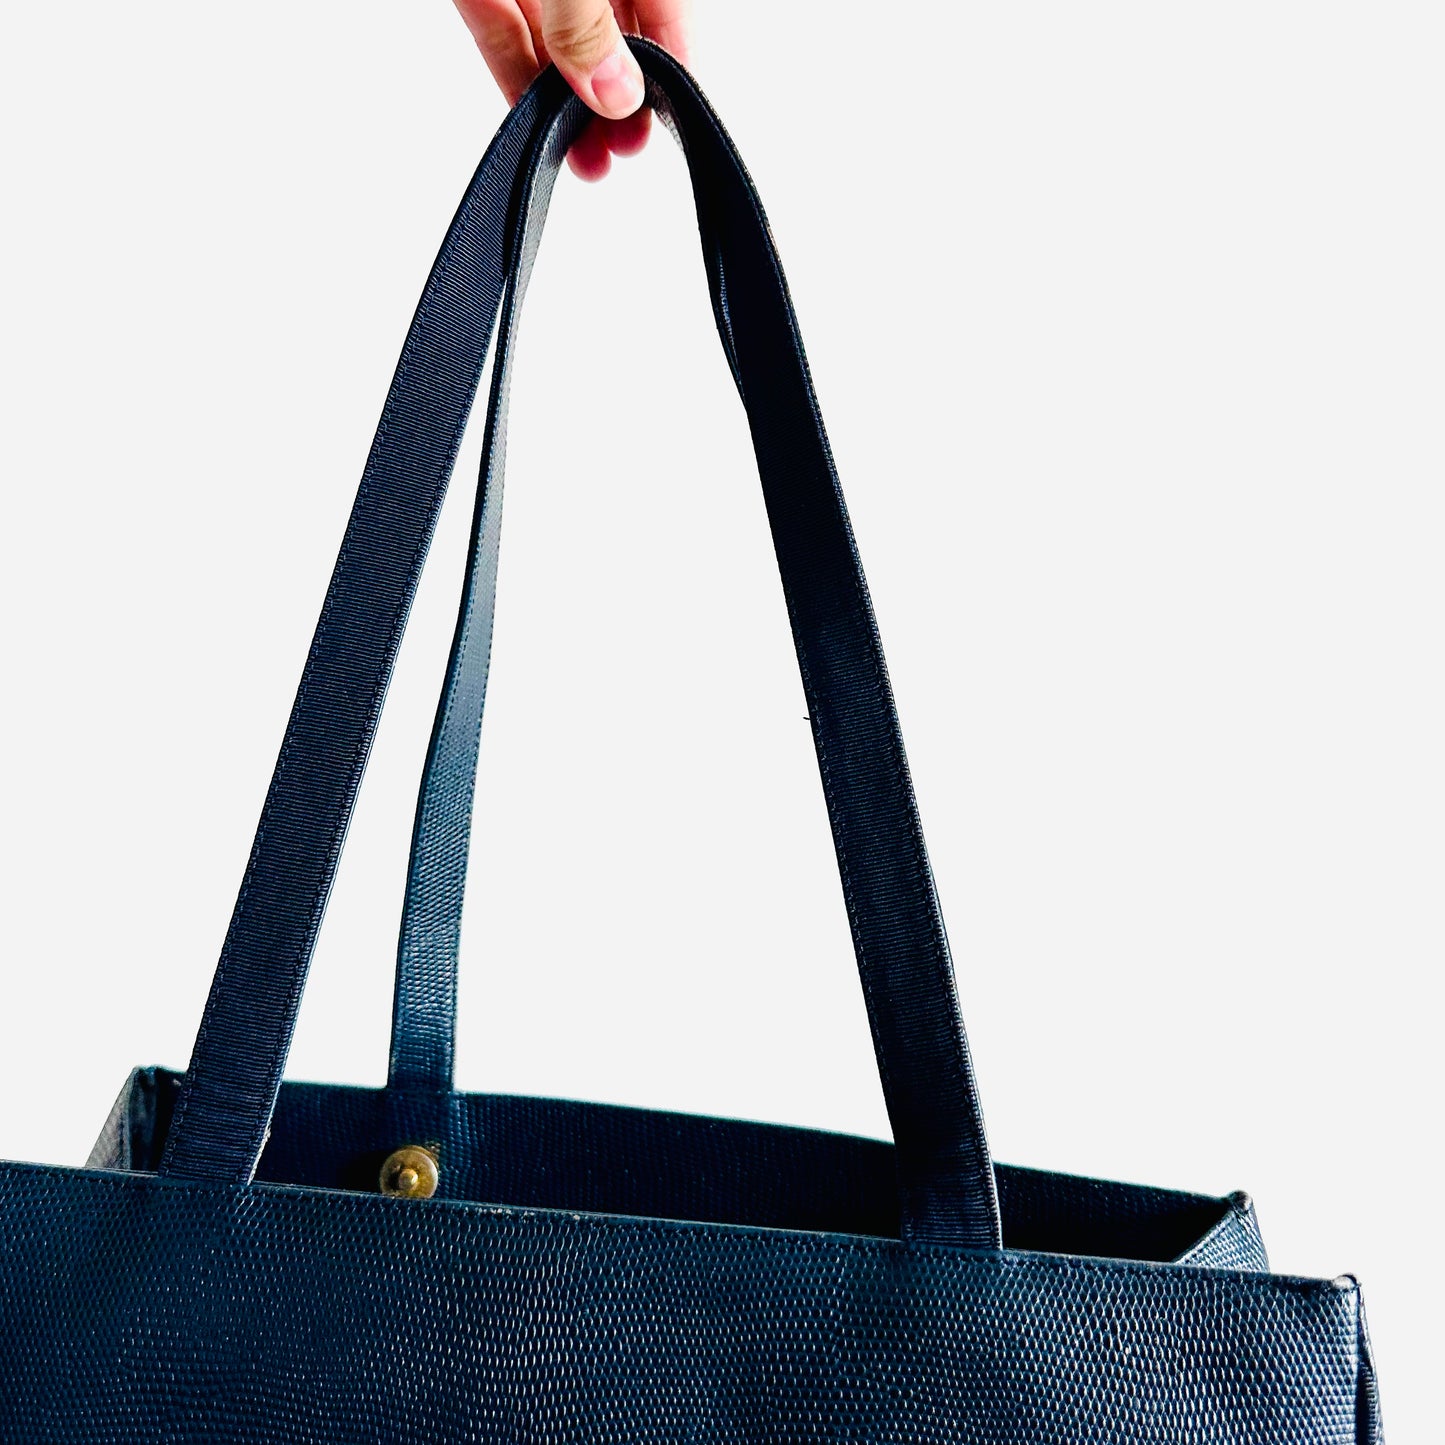 Salvatore Ferragamo Vara Bow Navy Blue GHW Embossed Leather Shopper Shoulder Tote Bag